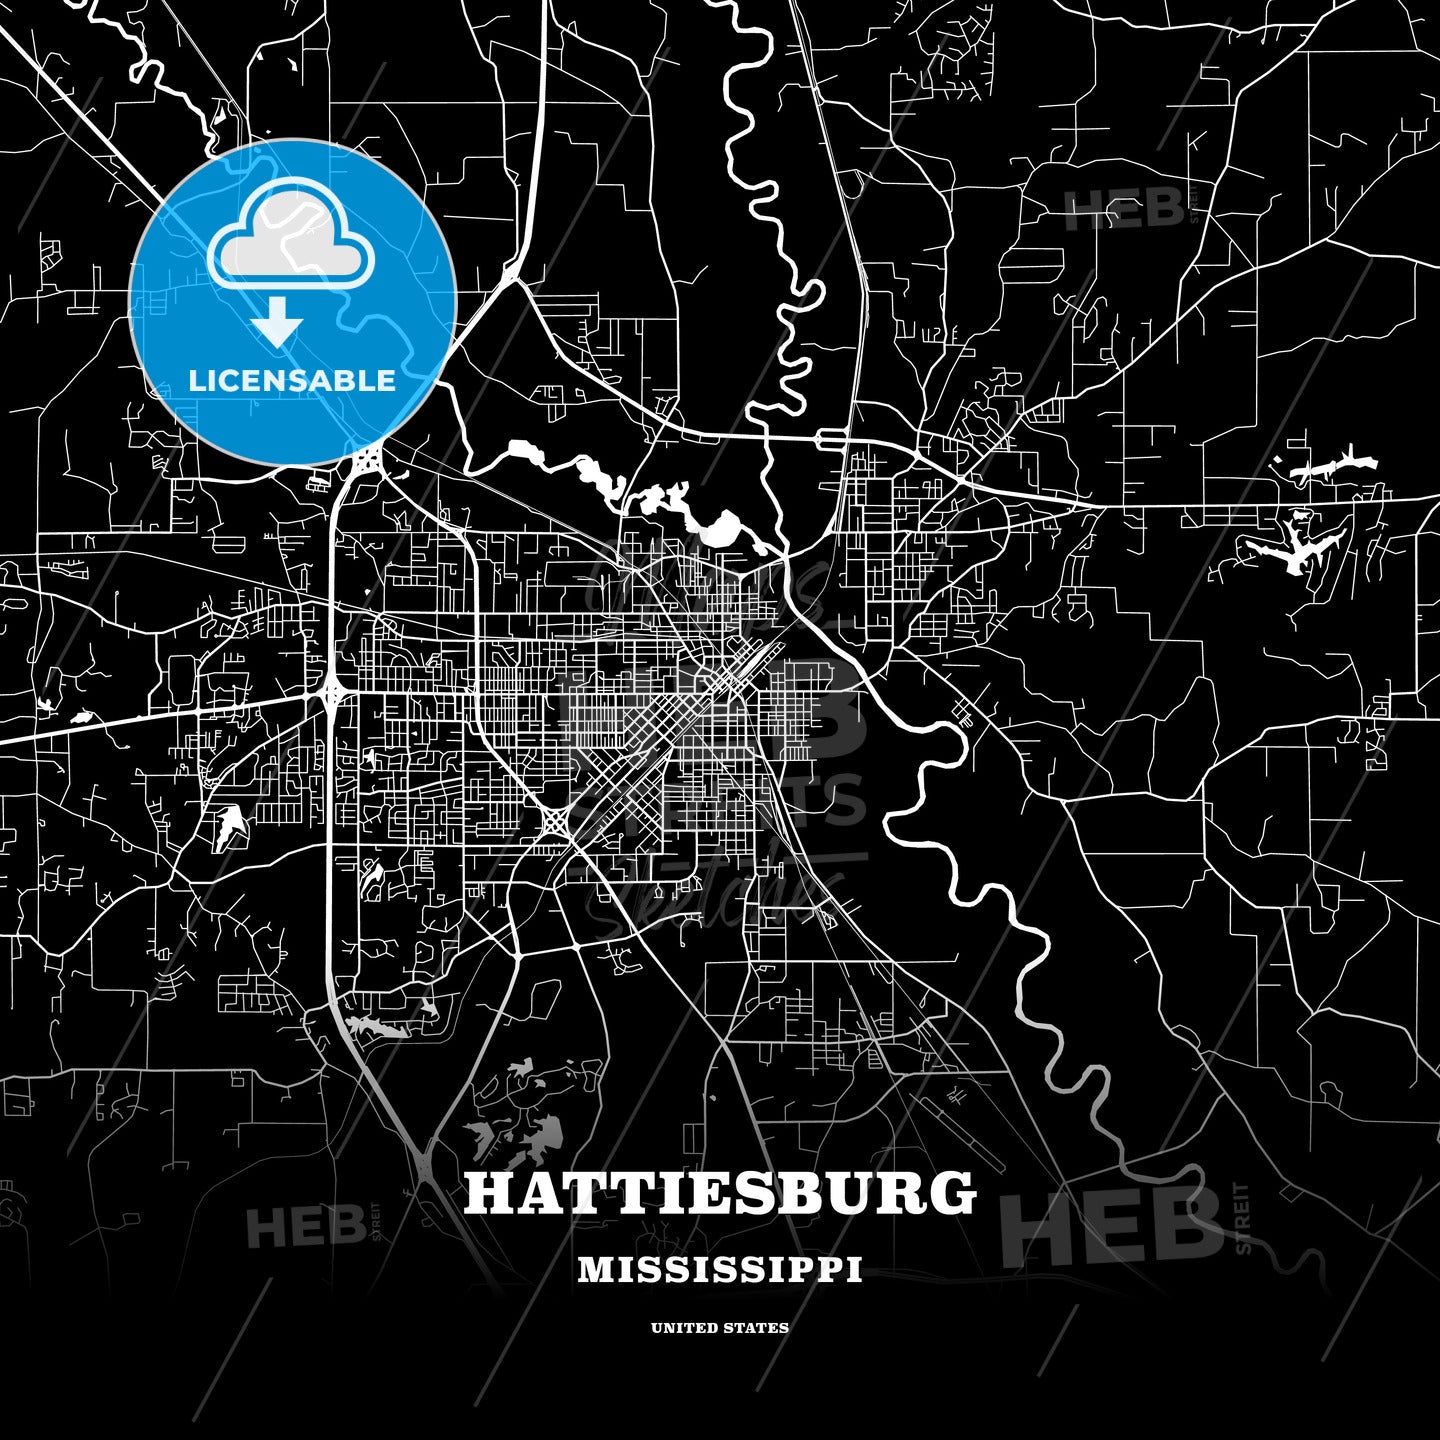 Hattiesburg, Mississippi, USA map